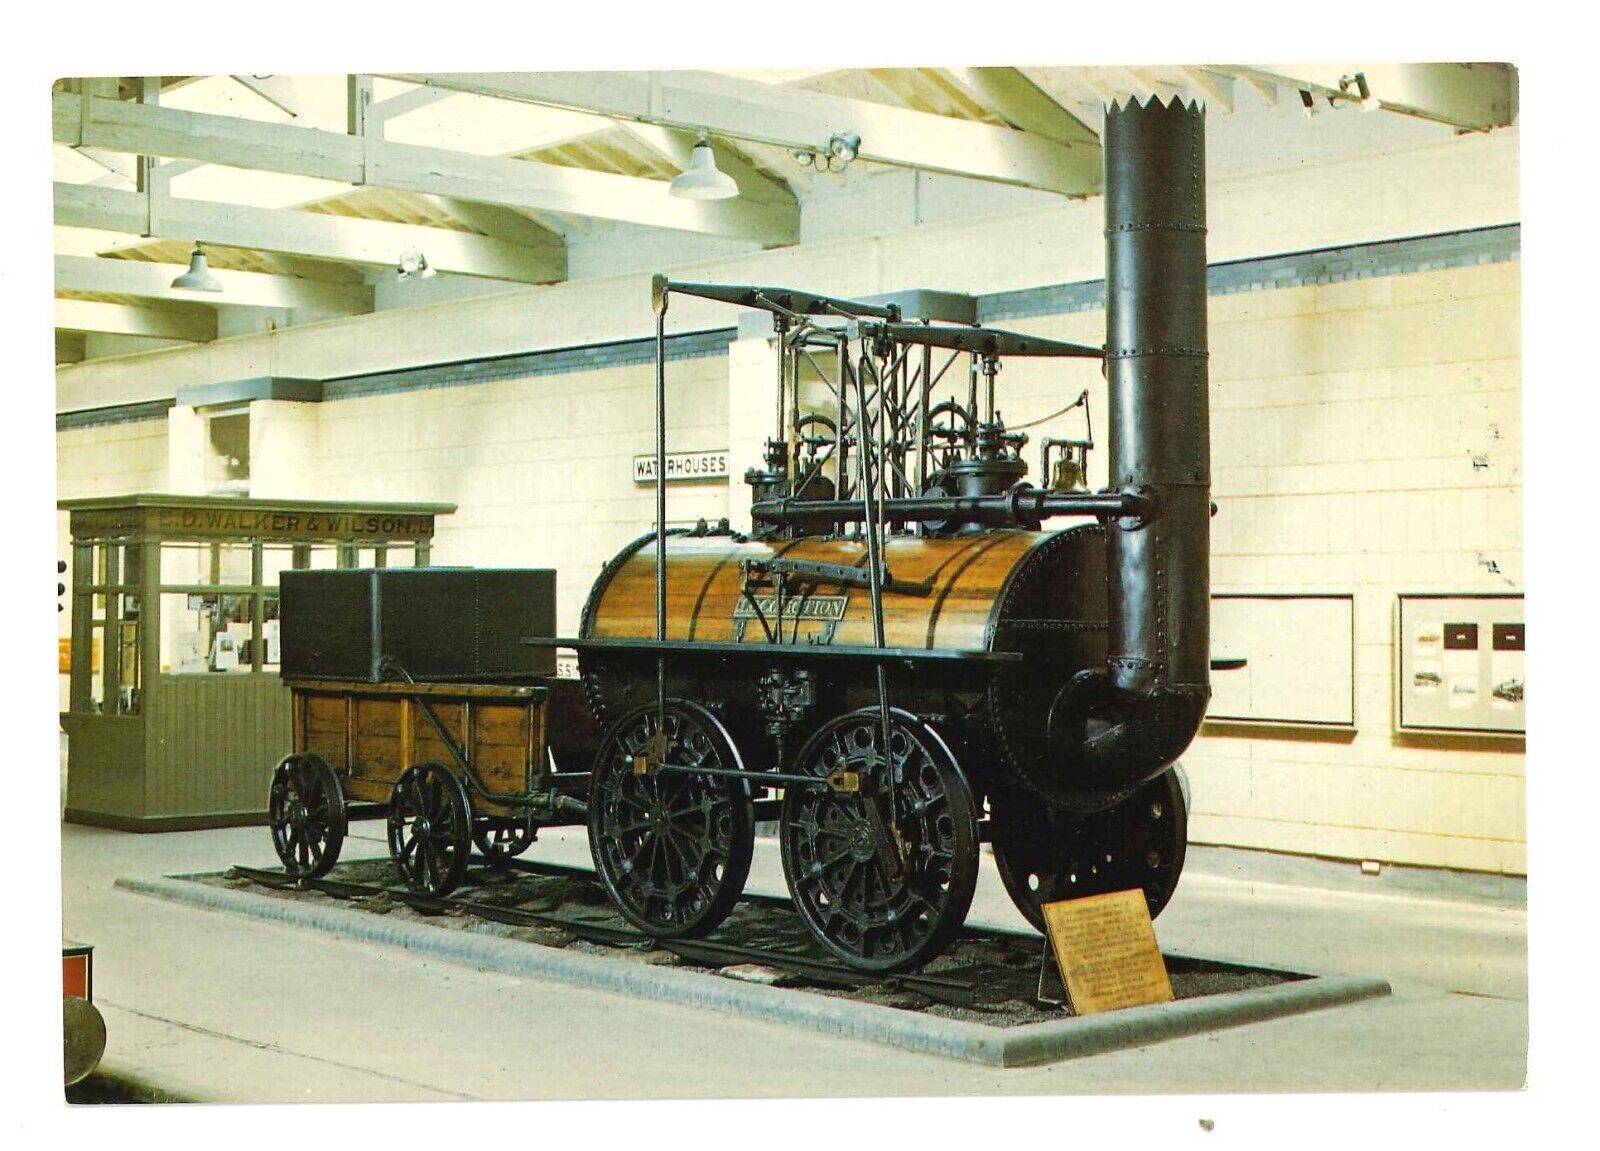 House Clearance - Stockton & Darlington Railway “Locomotion”.